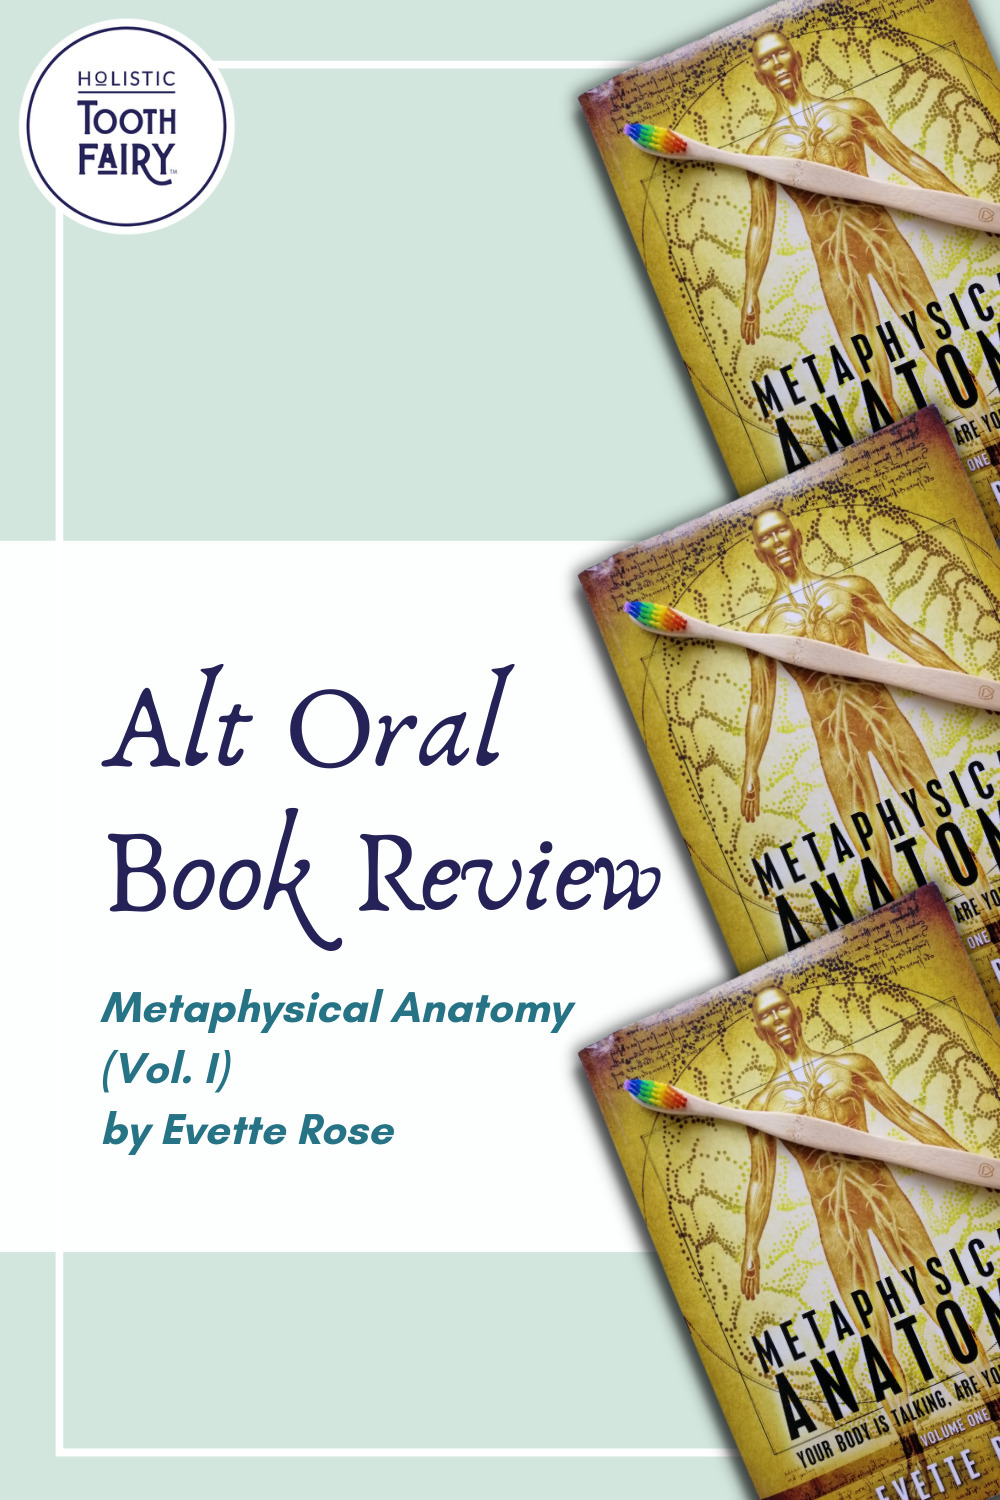 Alt oral book review